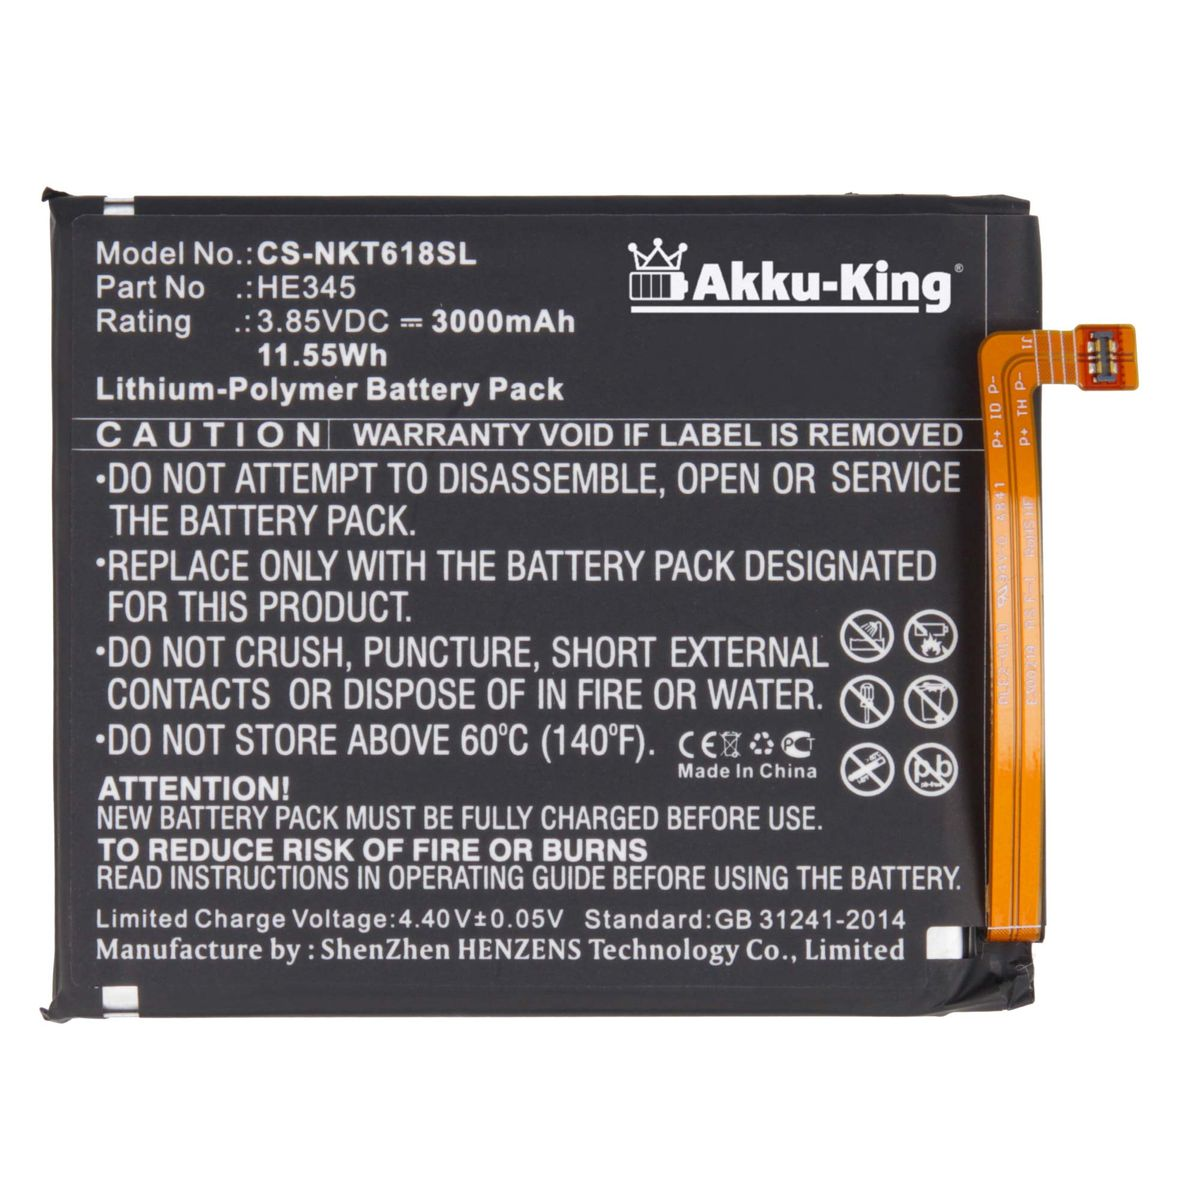 AKKU-KING Akku Nokia Handy-Akku, mit 3000mAh Volt, kompatibel HE345 3.85 Li-Polymer